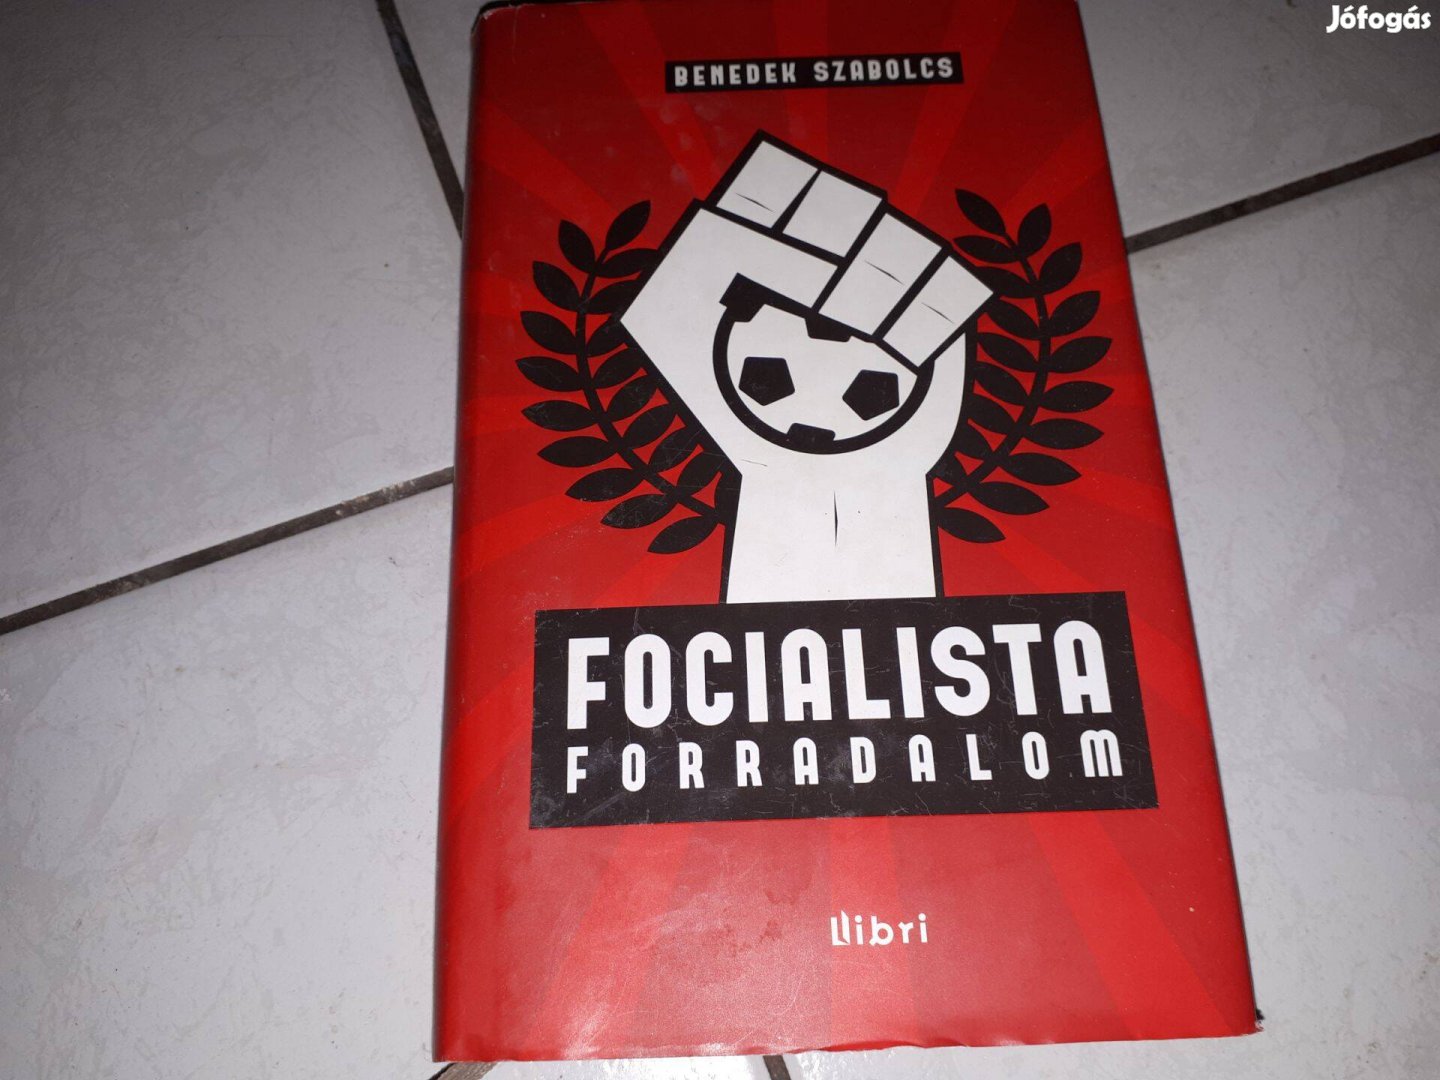 Benedek Szabolcs - Focialista forradalom